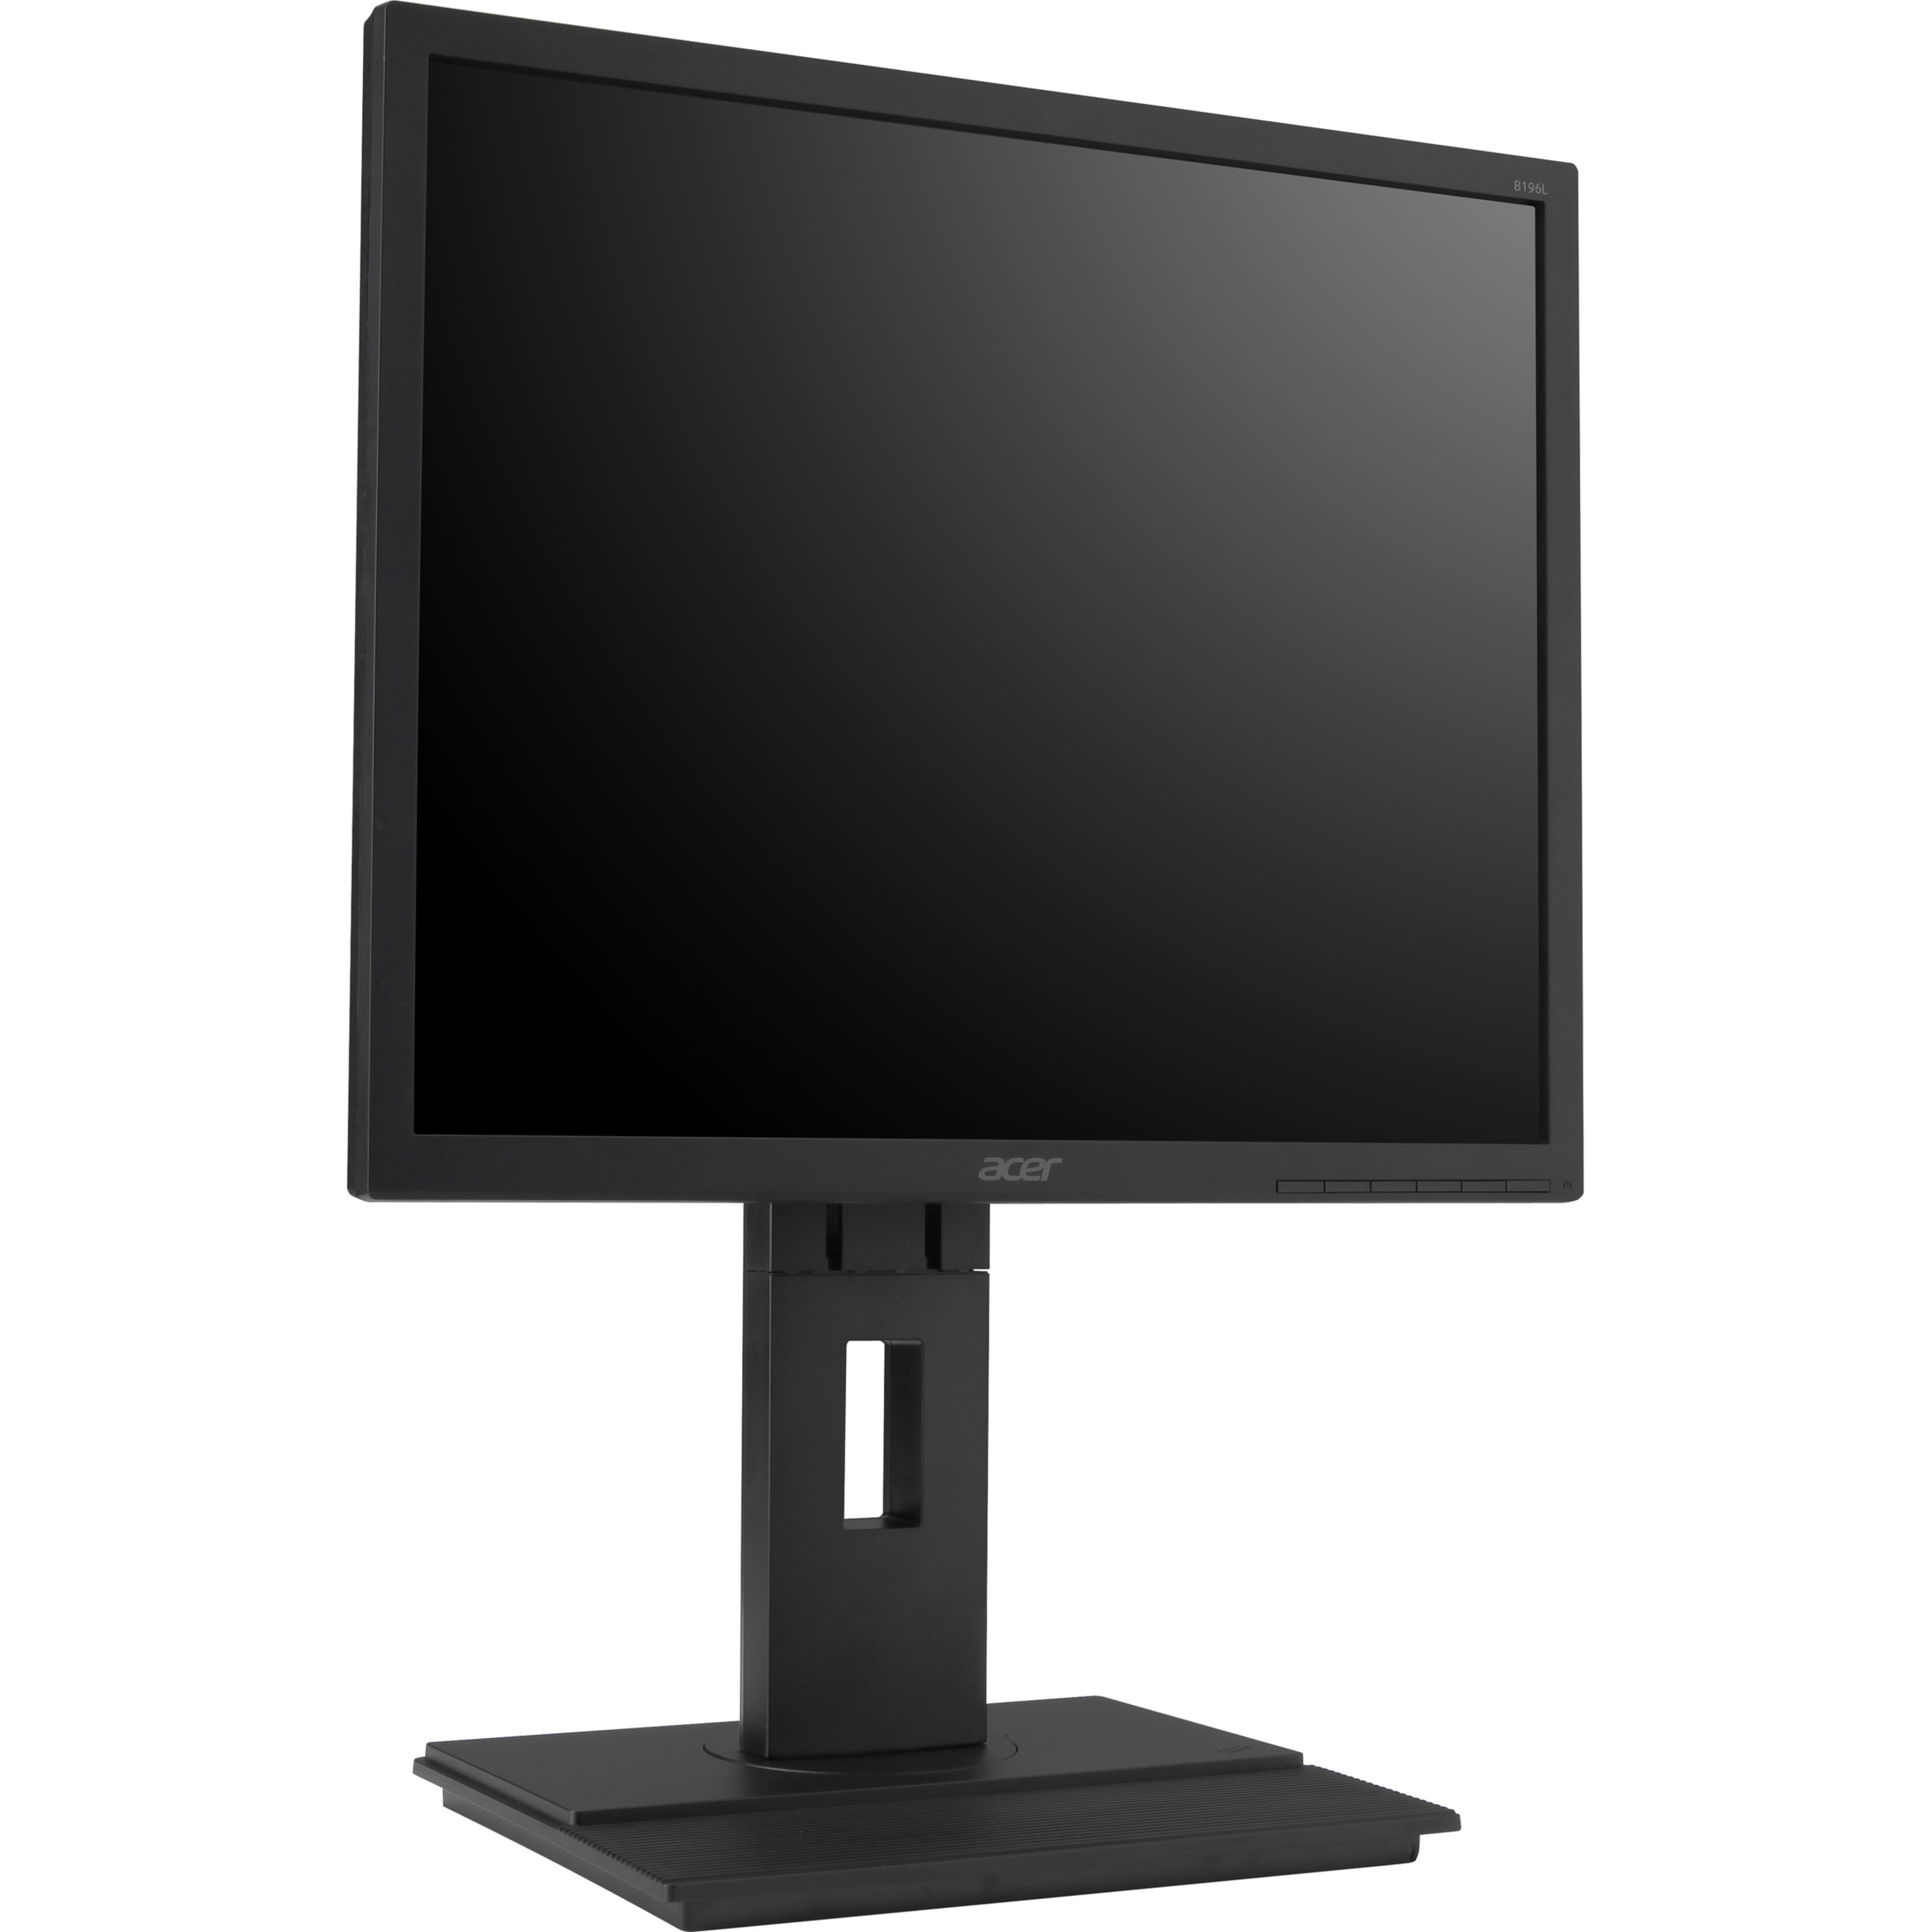 Acer B196L - LED monitor - 19" - image 3 of 5